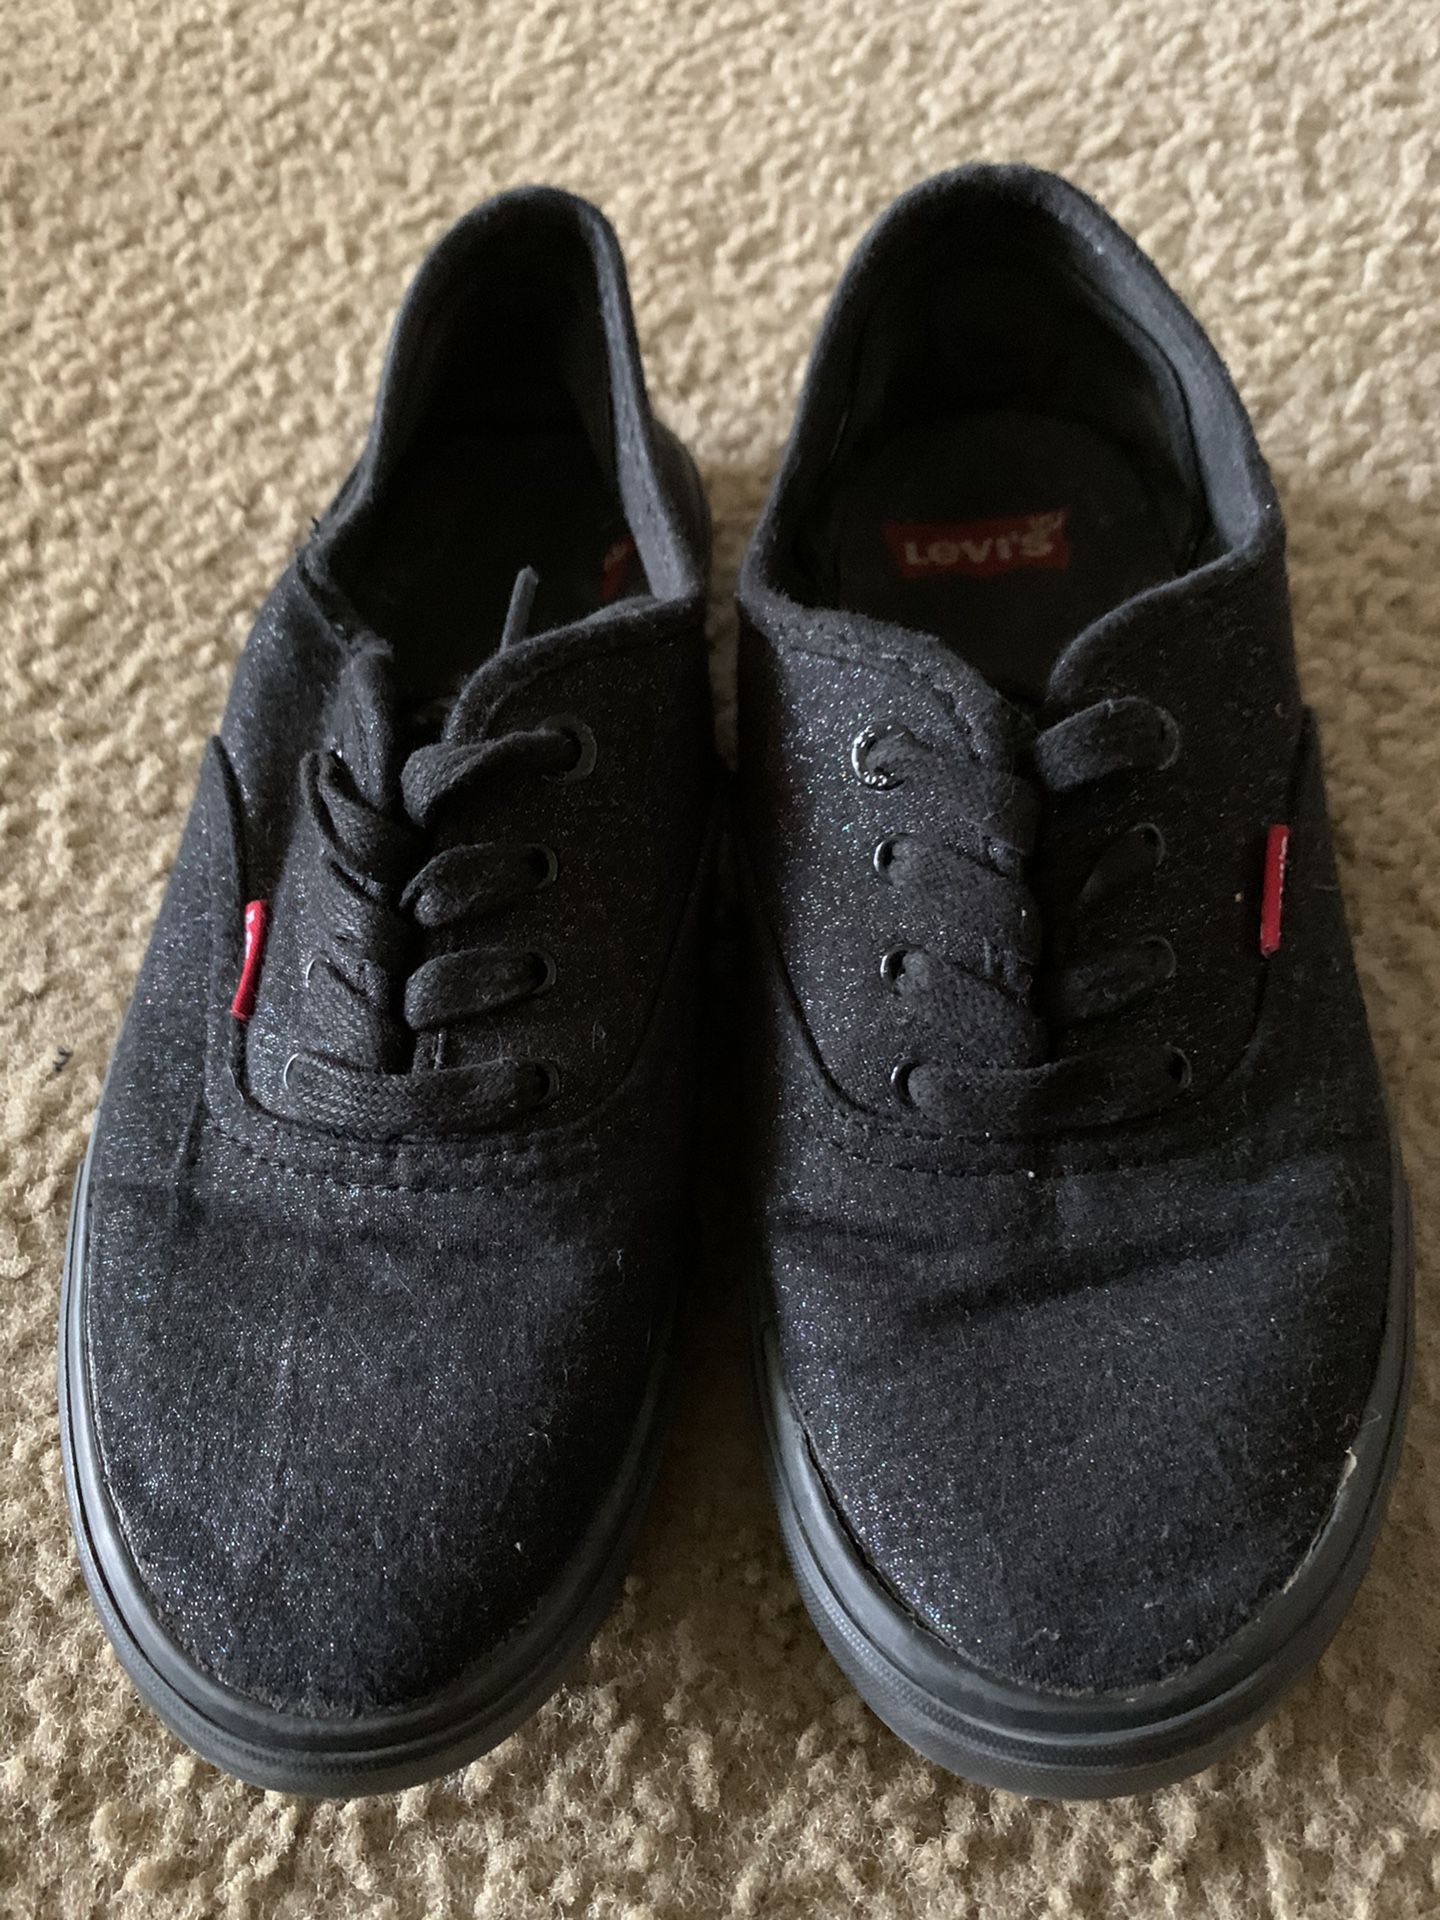 Levi sneakers 7.5